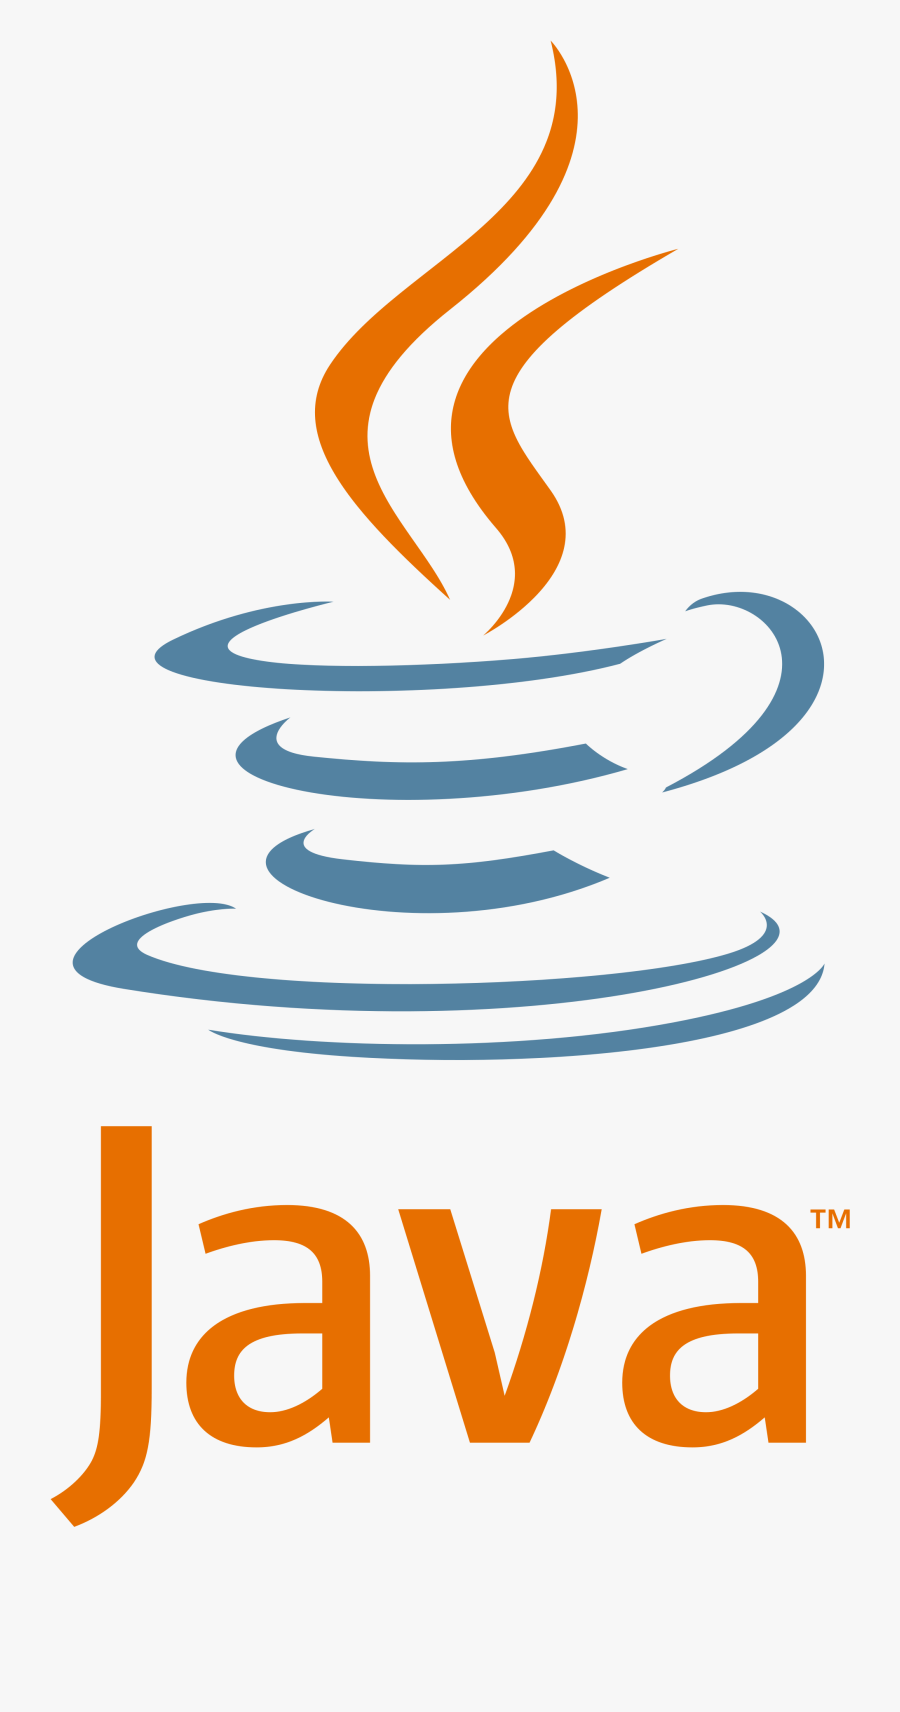 Java Png Transparent Images - Java Logo Png, Transparent Clipart